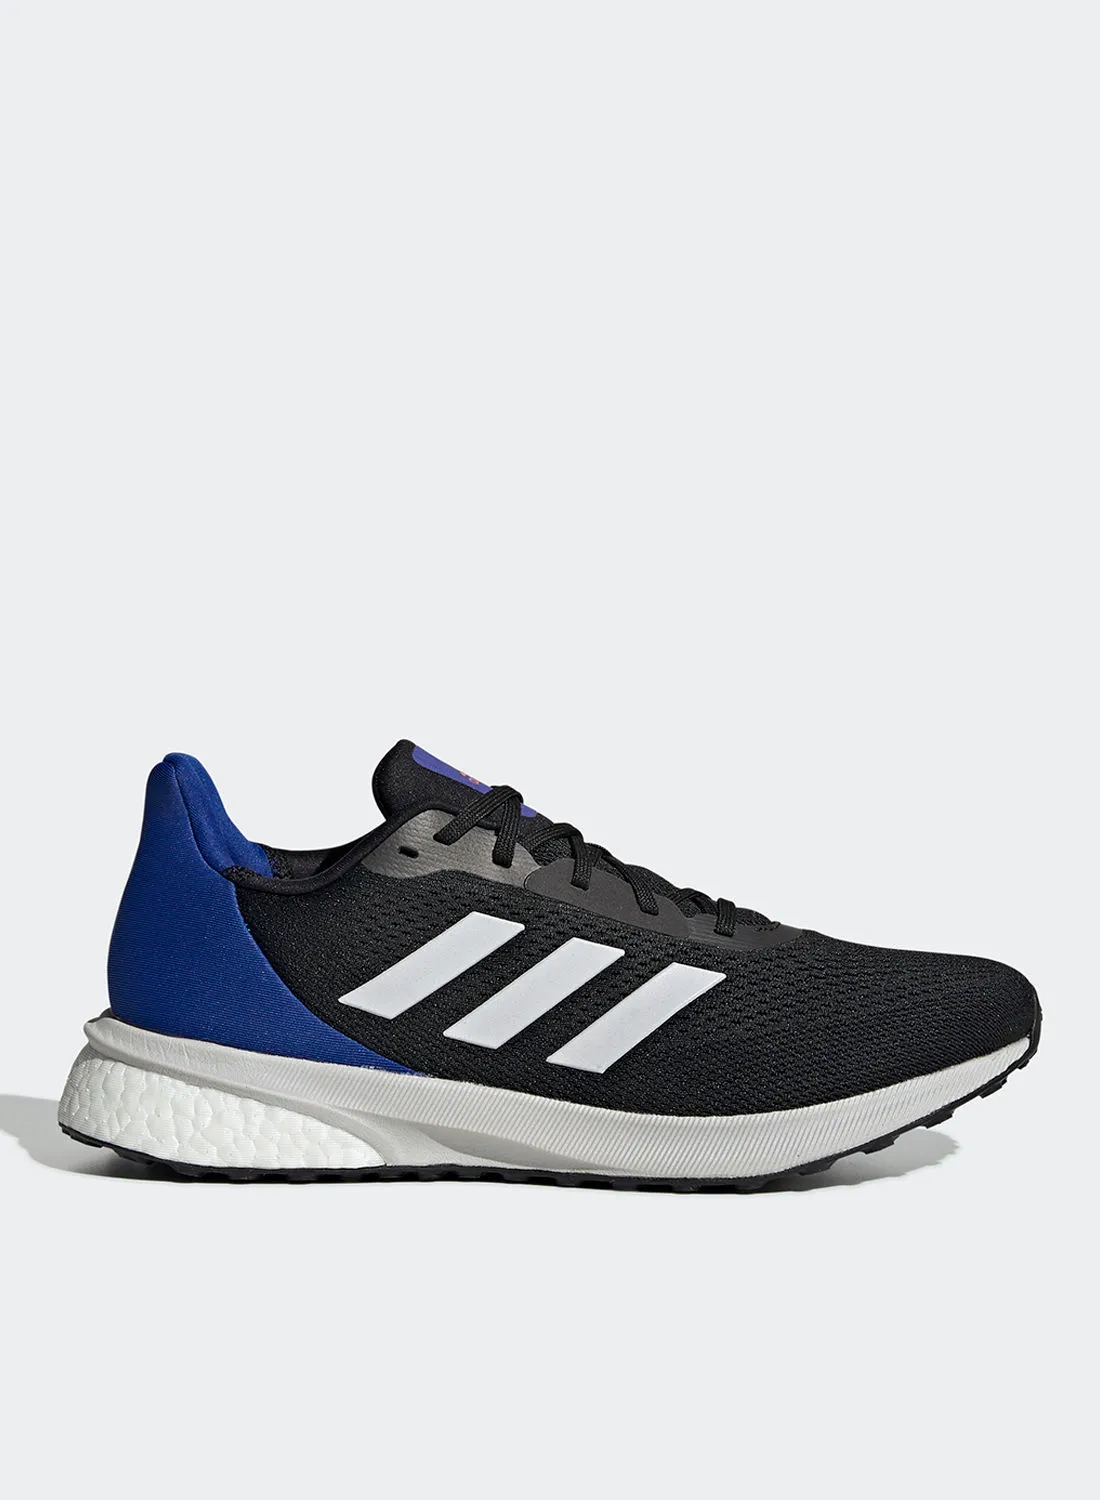 Adidas Astrarun Running Low Top Sneakers Black/Blue